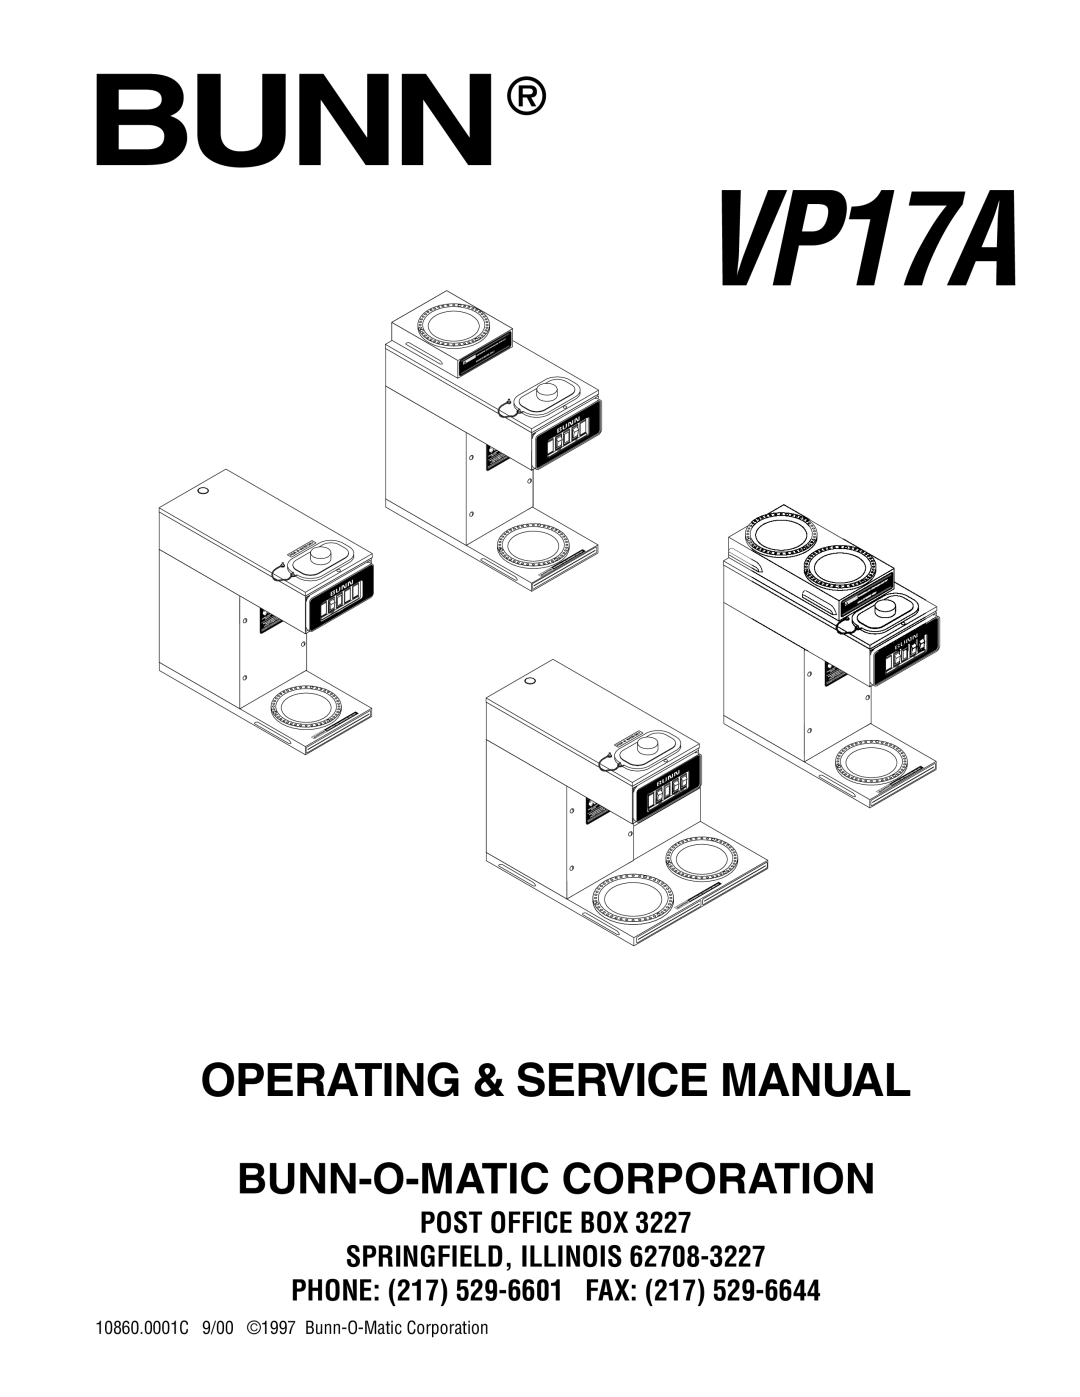 Bunn VP17A service manual Bunn-O-Maticcorporation, Post Office Box Springfield, Illinois, PHONE 217 529-6601FAX 